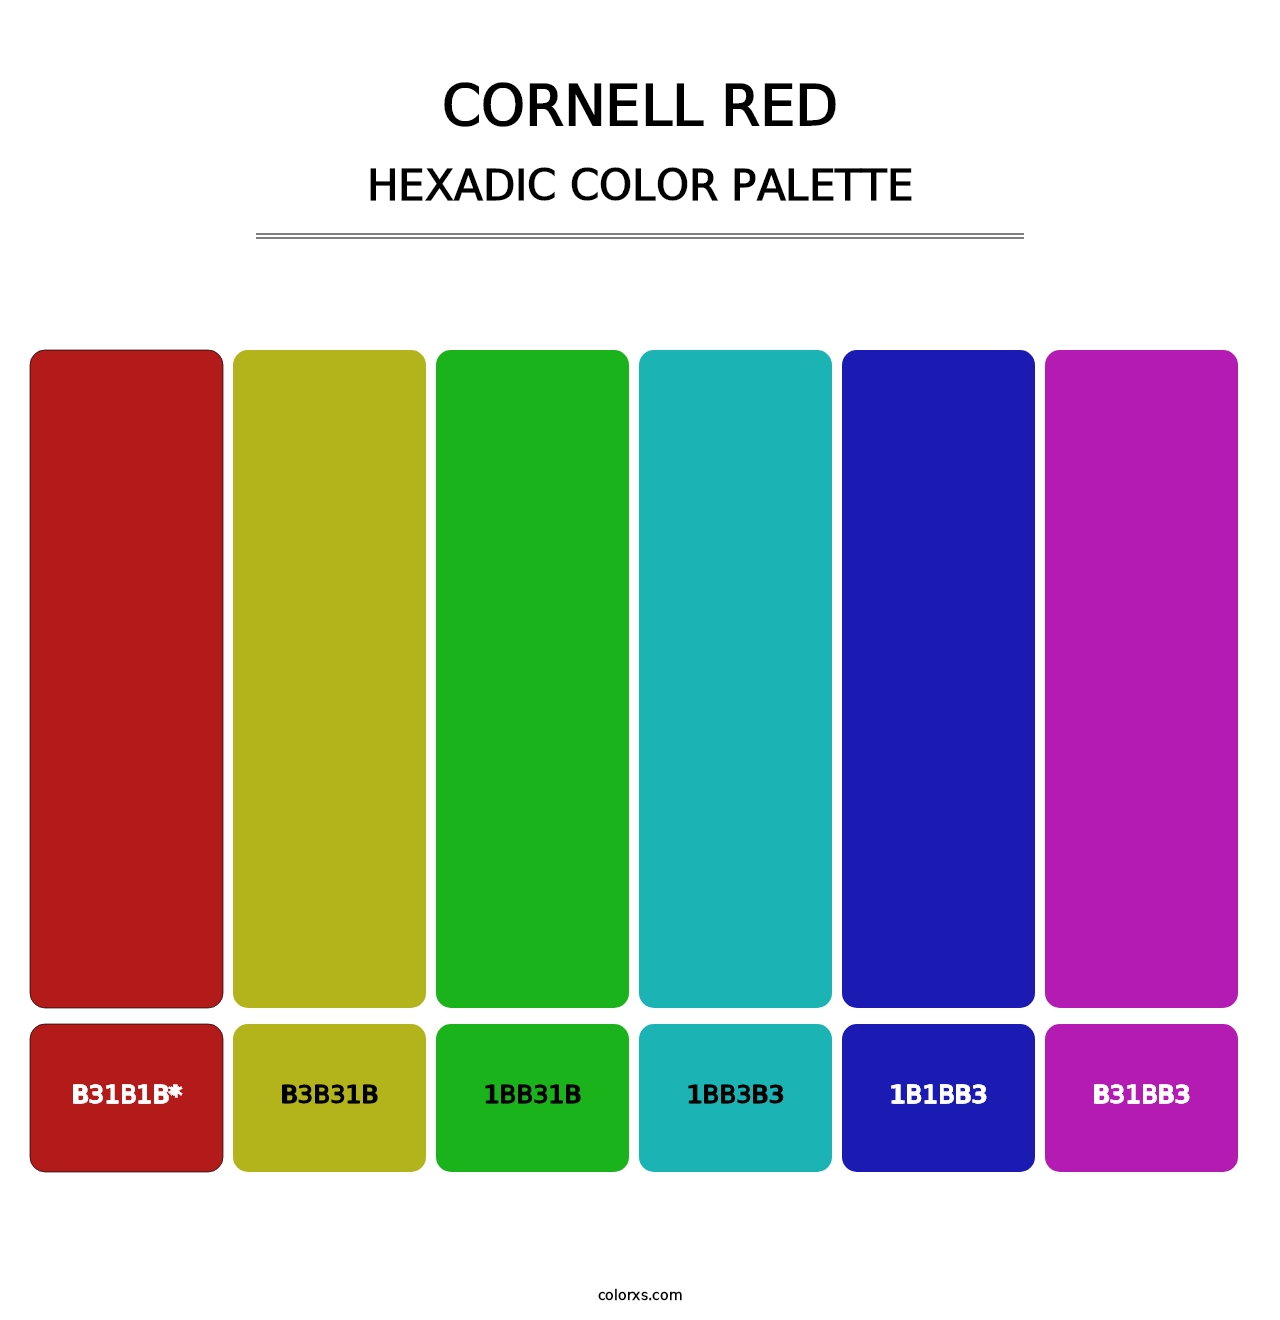 Cornell Red - Hexadic Color Palette